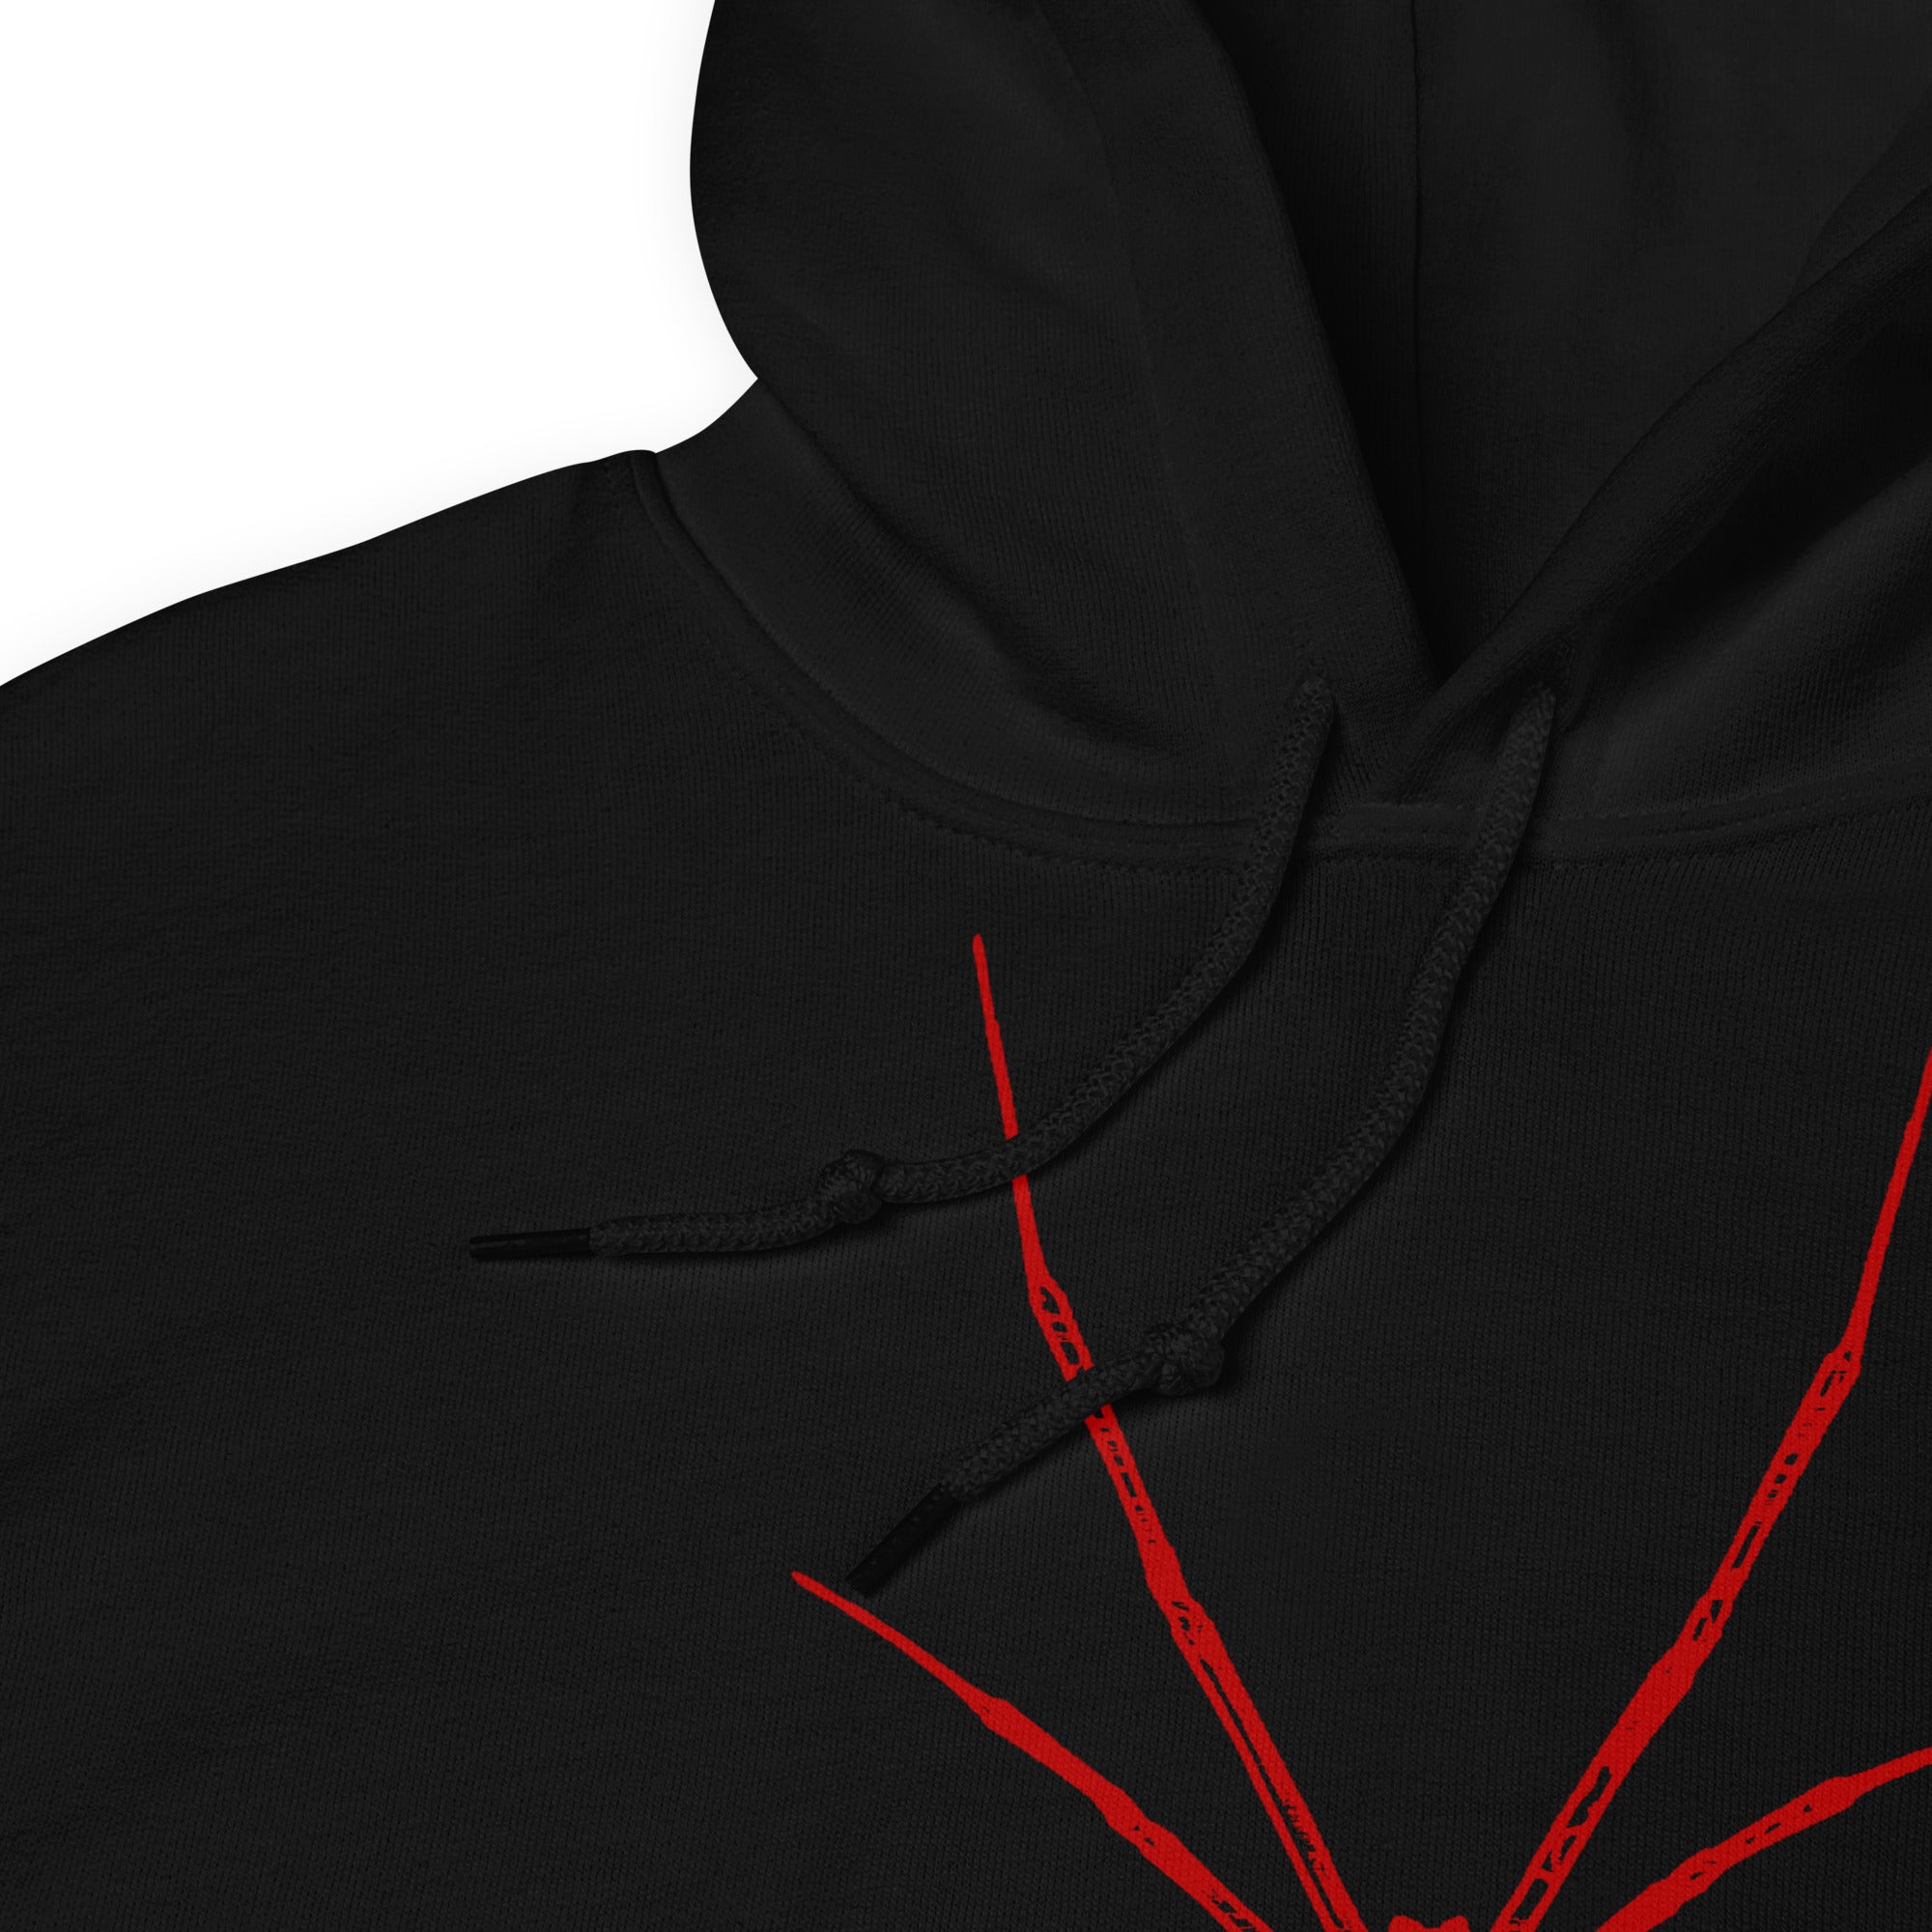 Red Creepy Spider Arachnid Black Widow Unisex Hoodie Sweatshirt - Edge of Life Designs